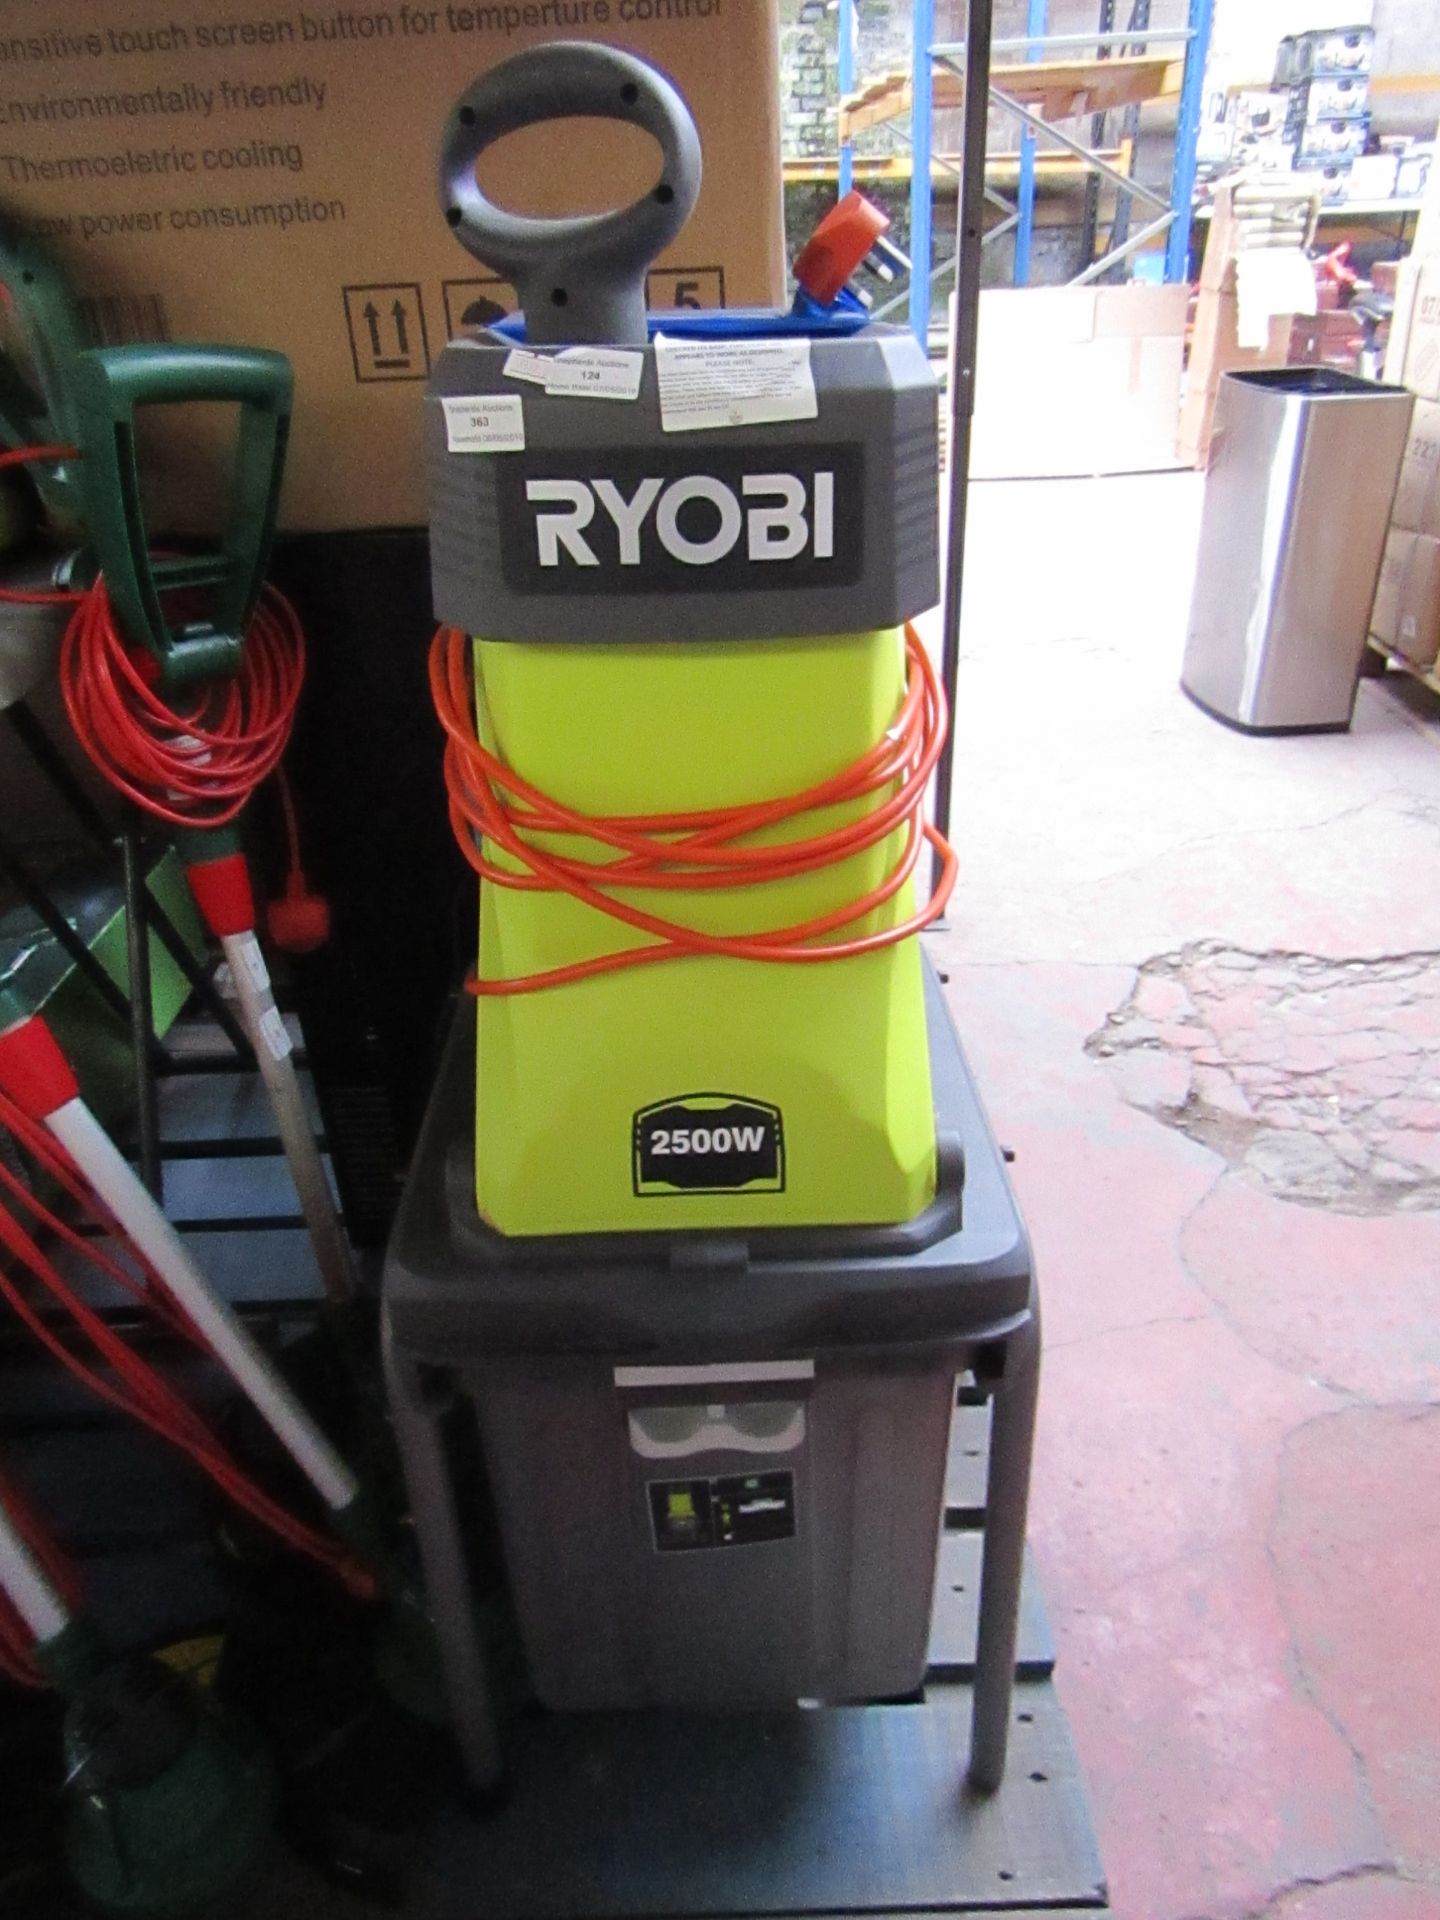 Ryobi Garden Shredder 2500W, in tested working condition. No box